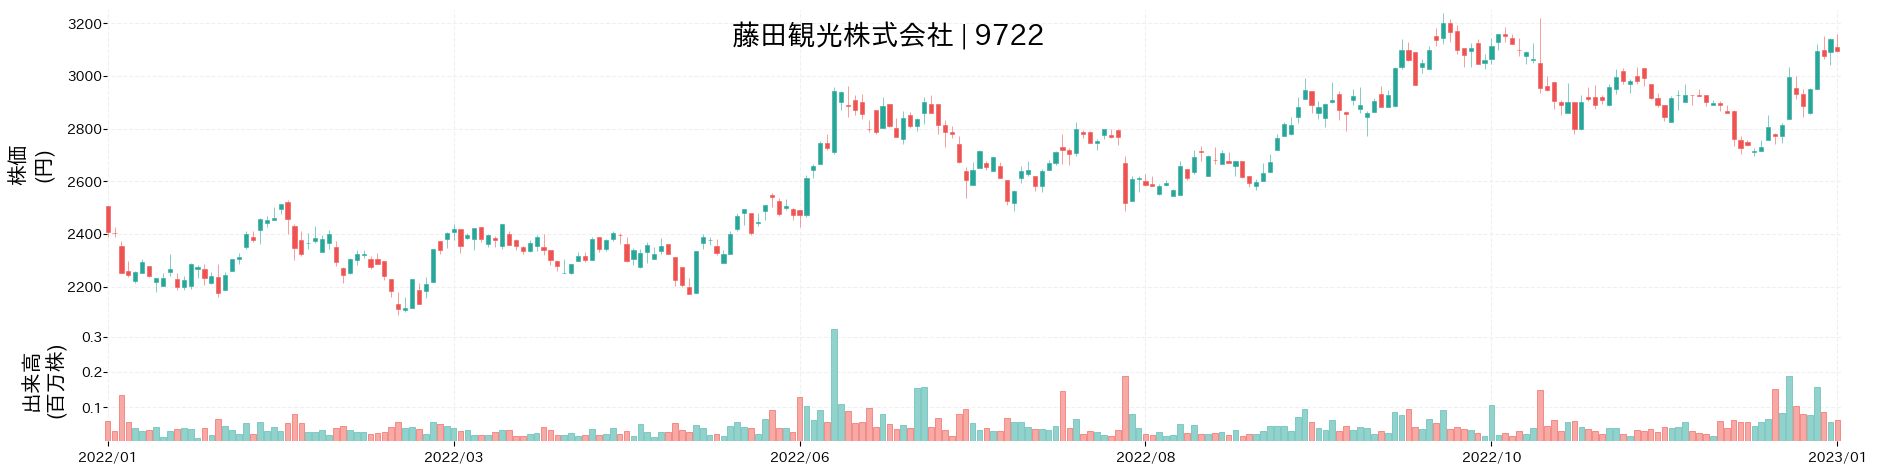 藤田観光の株価推移(2022)